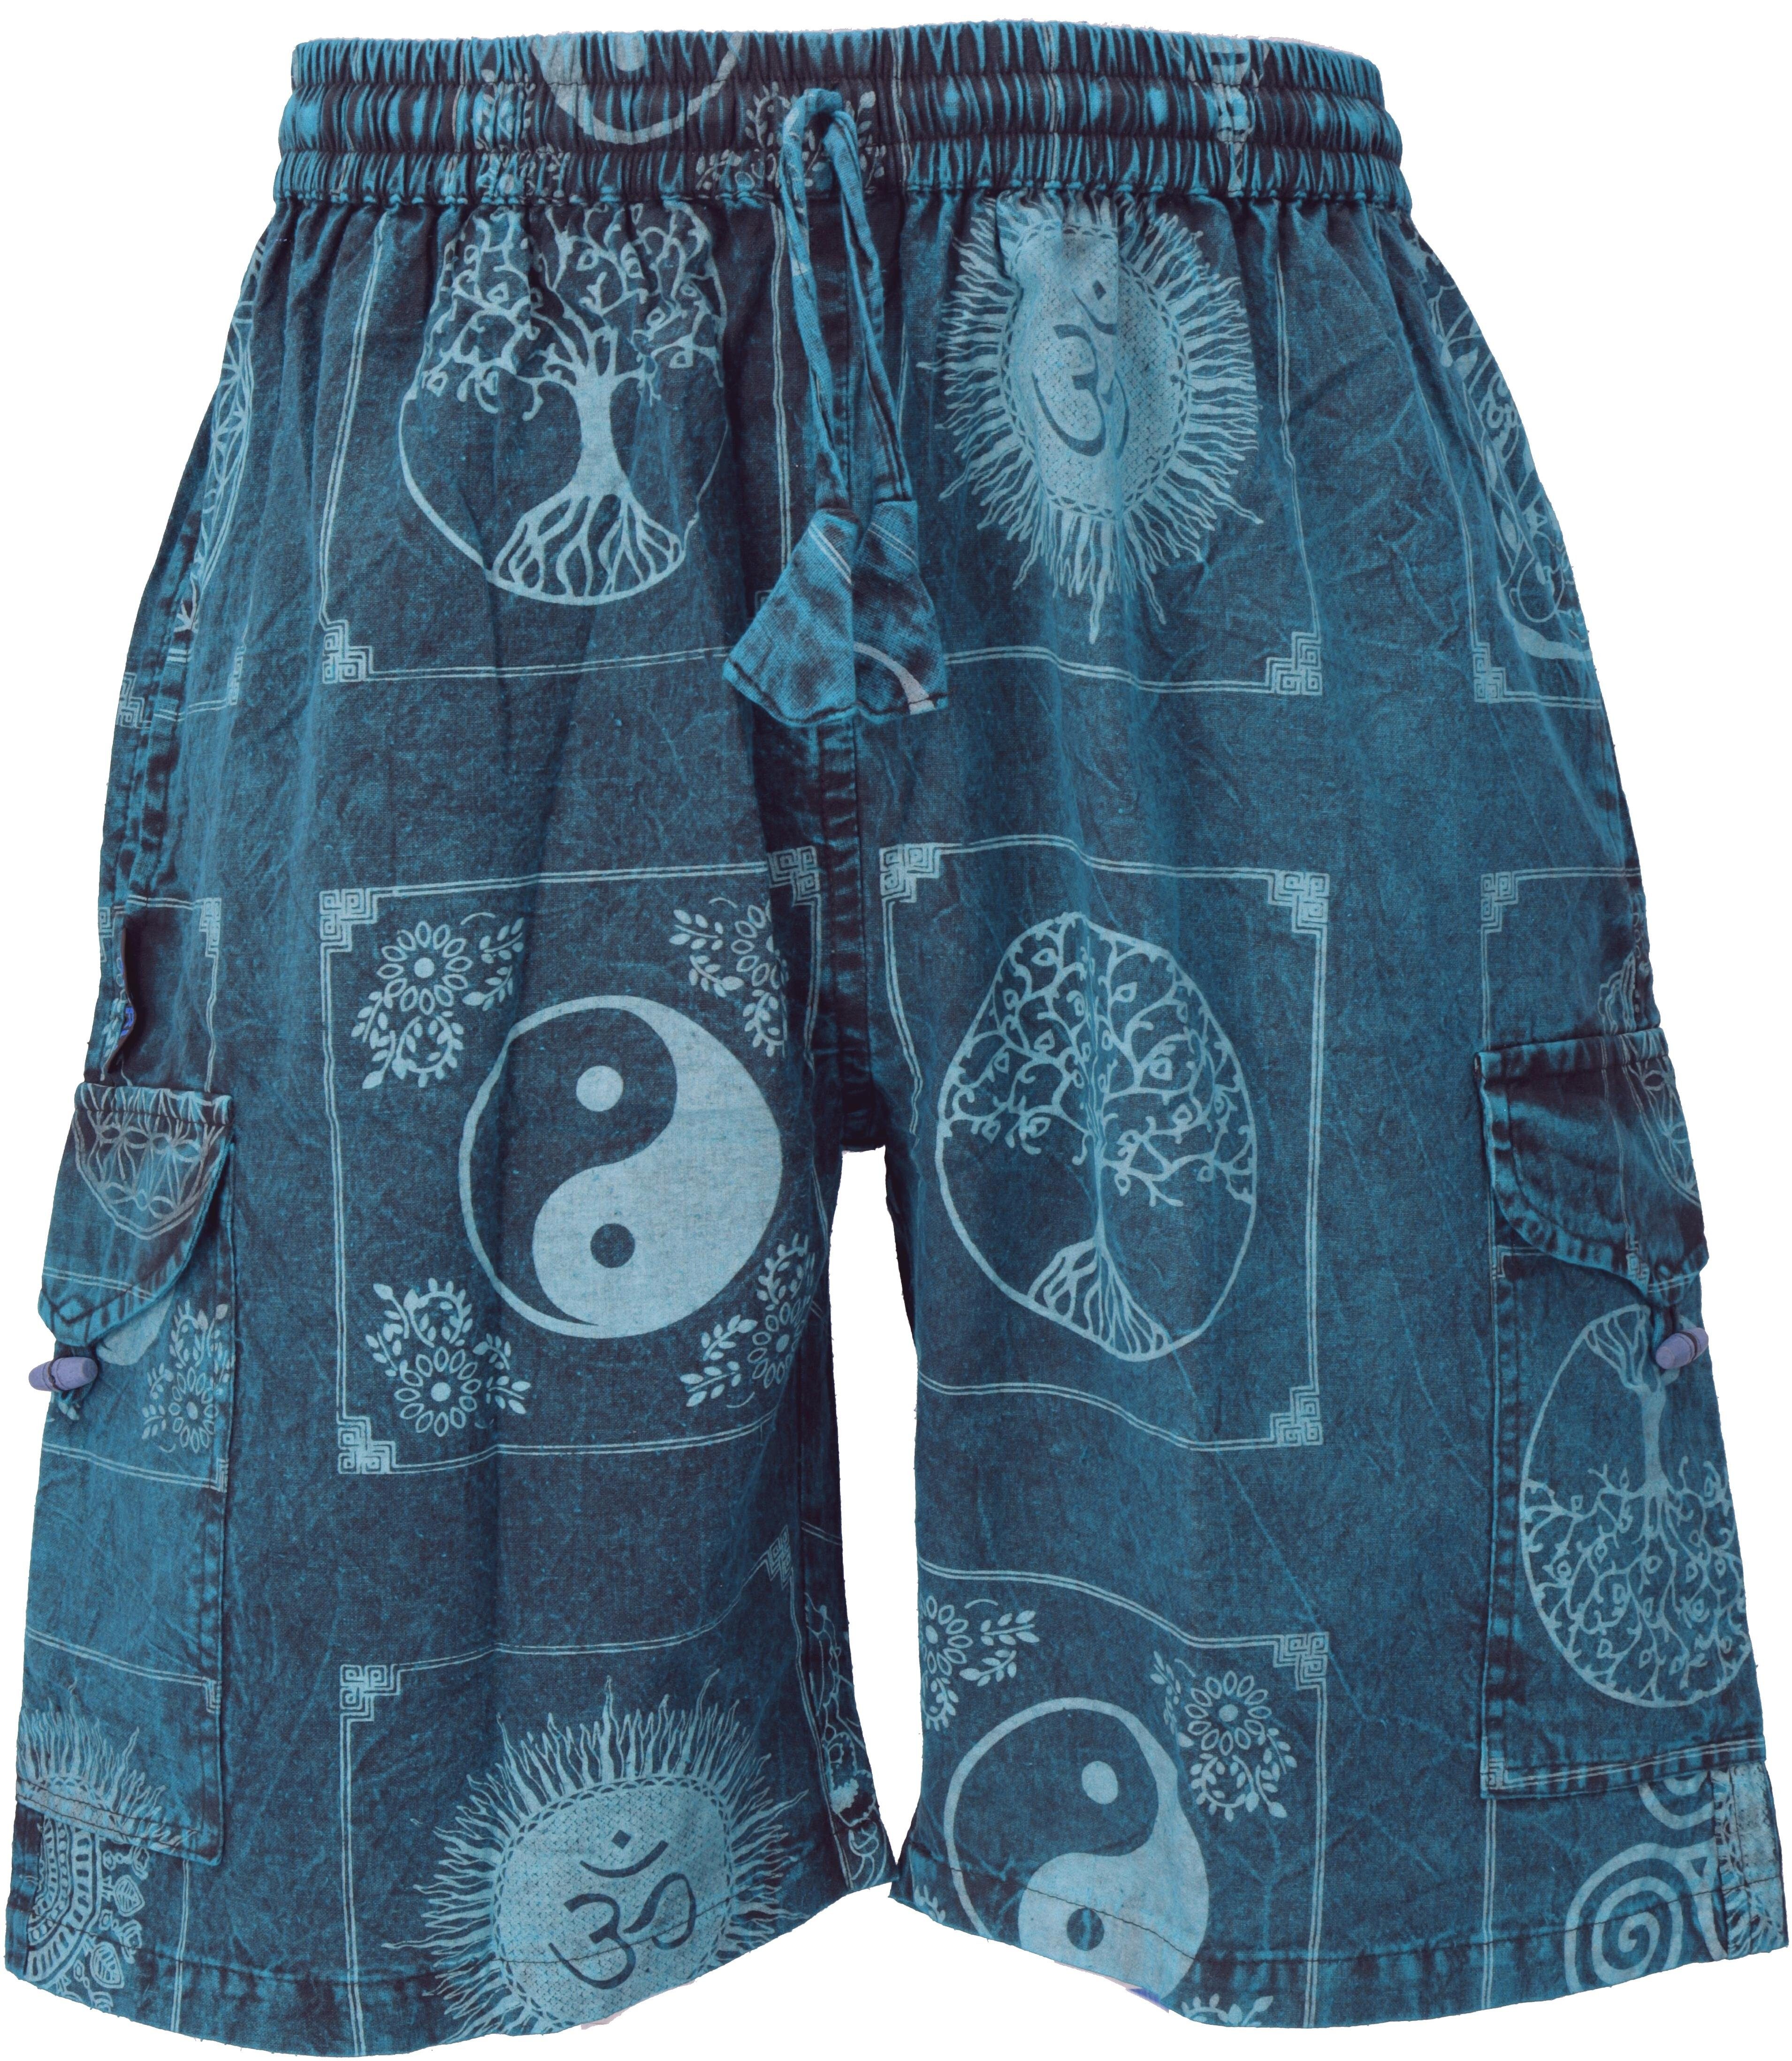 Guru-Shop Relaxhose Ethno Yogashorts, stonewash Shorts aus Nepal -.. Hippie, Ethno Style, alternative Bekleidung blau